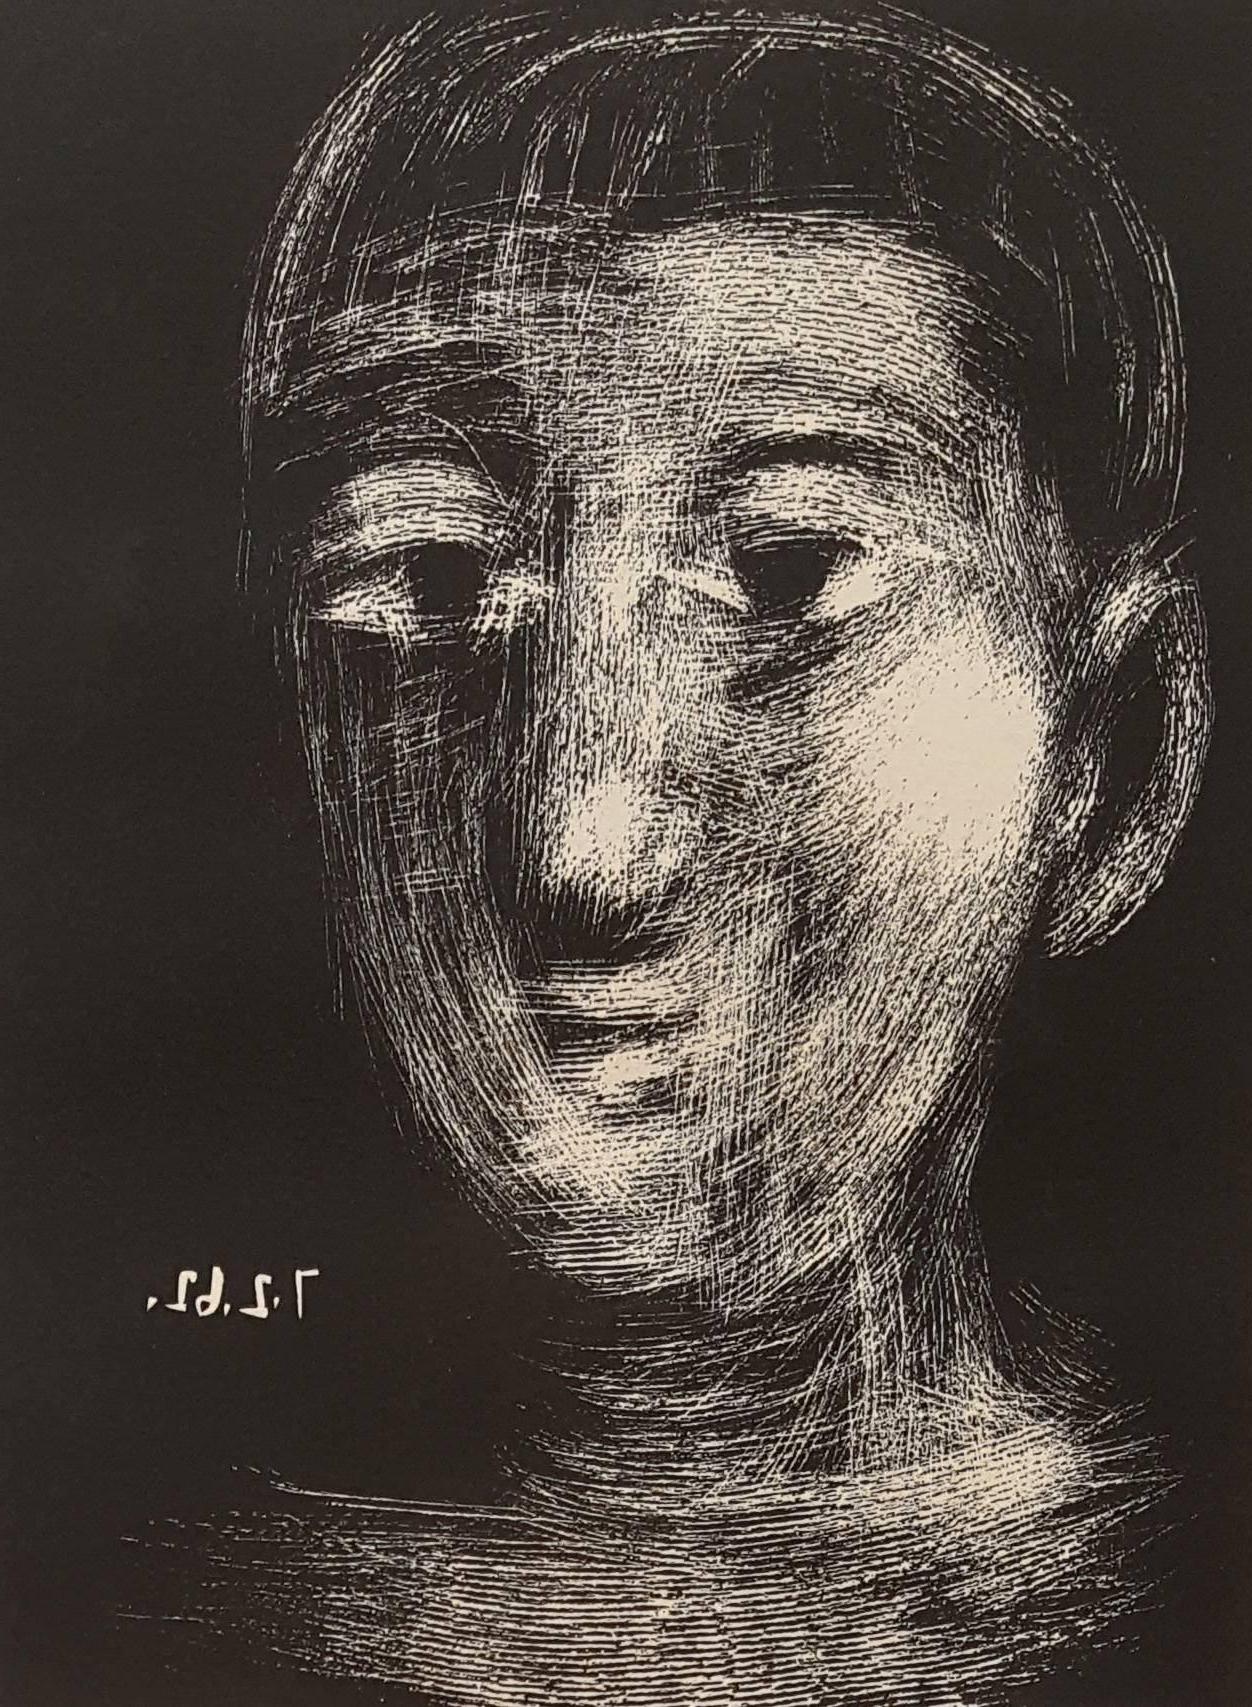 Boy's Head - Original Etching Handsigned - 50 copies - Beige Figurative Print by Pablo Picasso